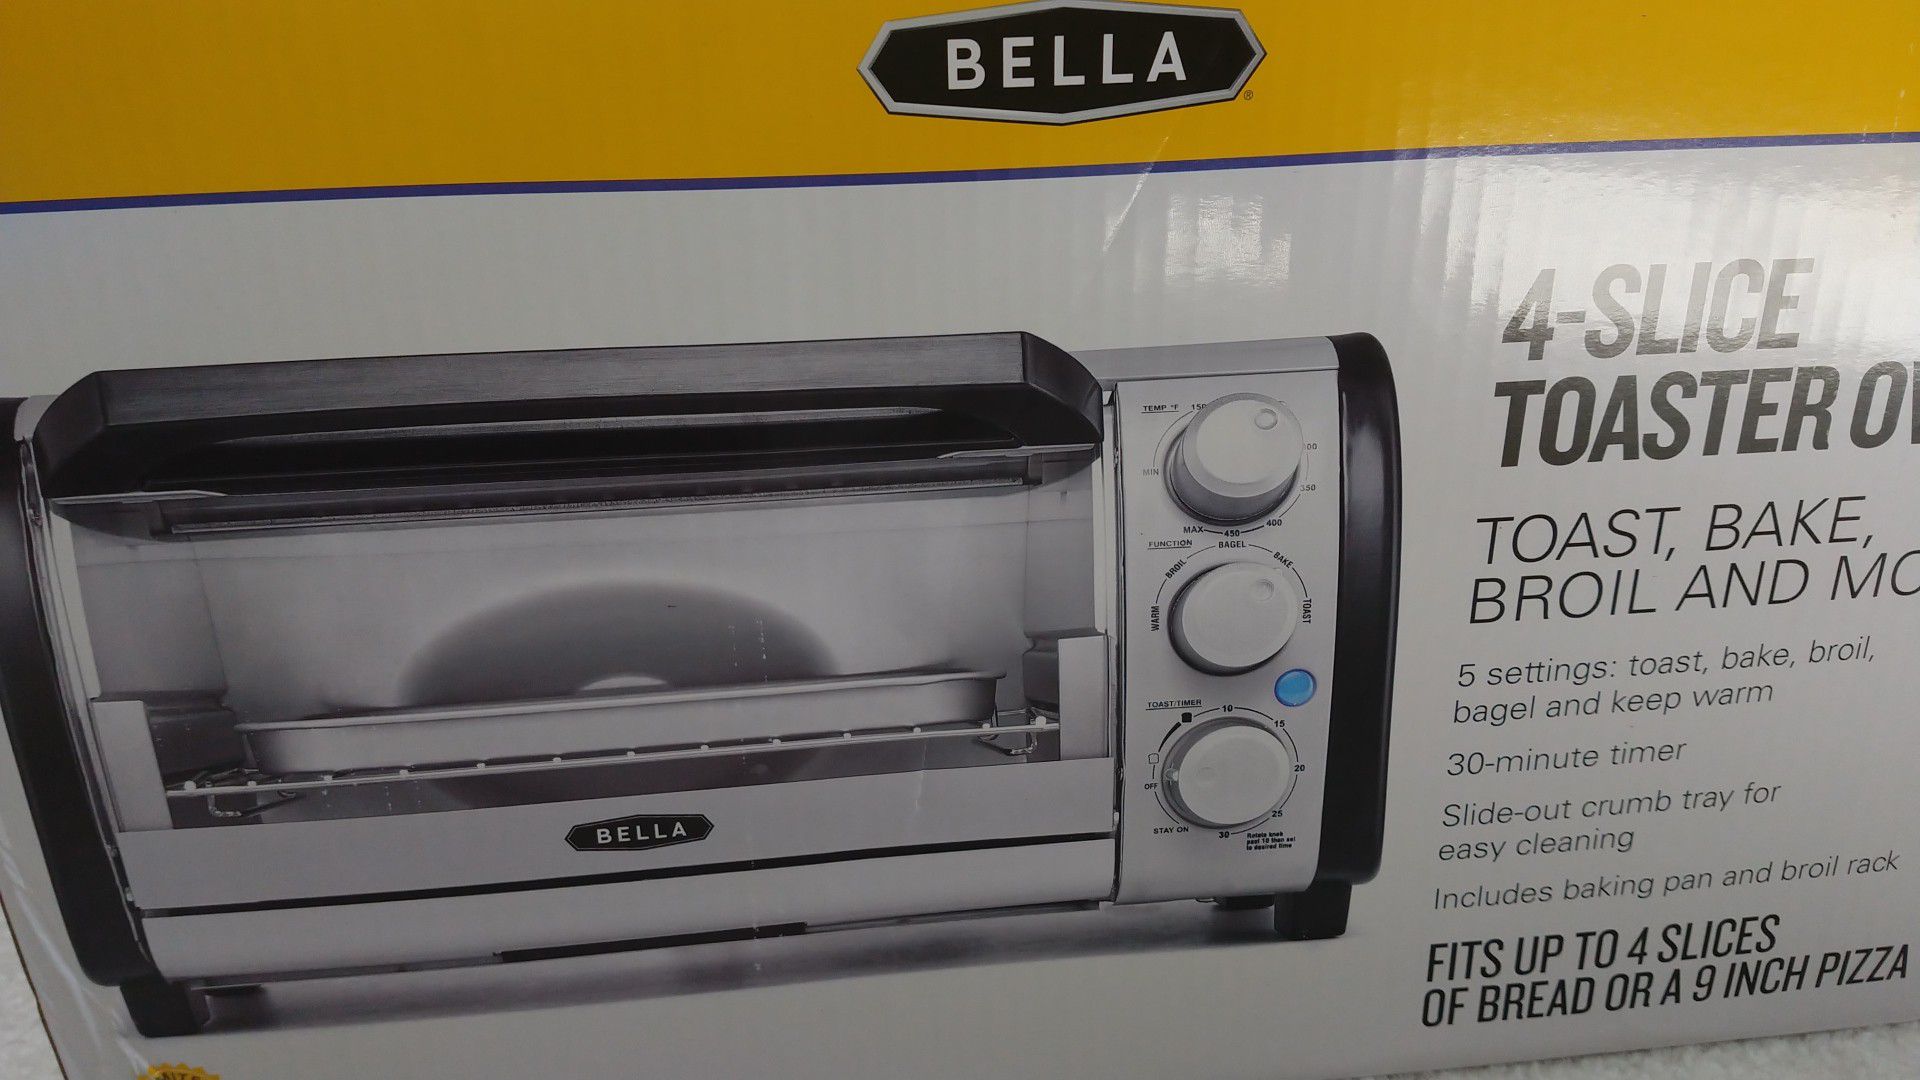 Bella 4 slice toaster oven